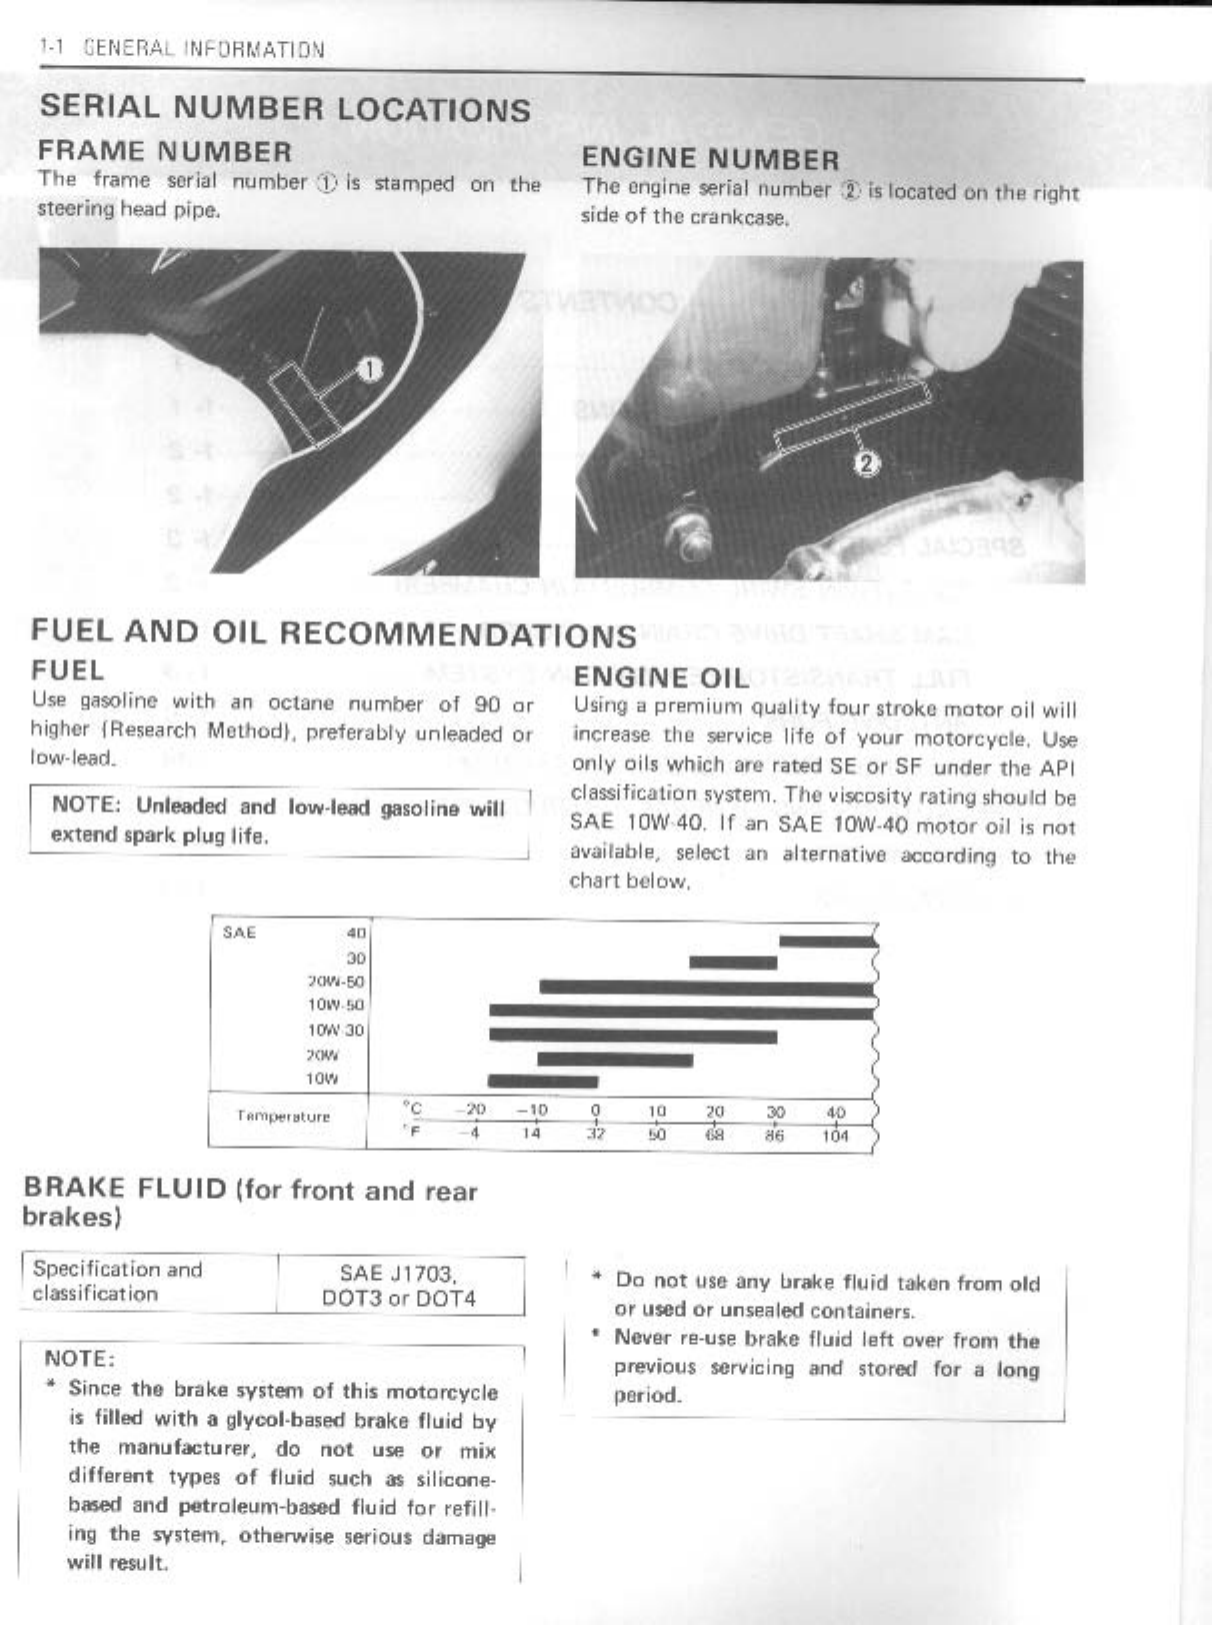 1983-1987 Suzuki GSX750 repair and service manual Preview image 5